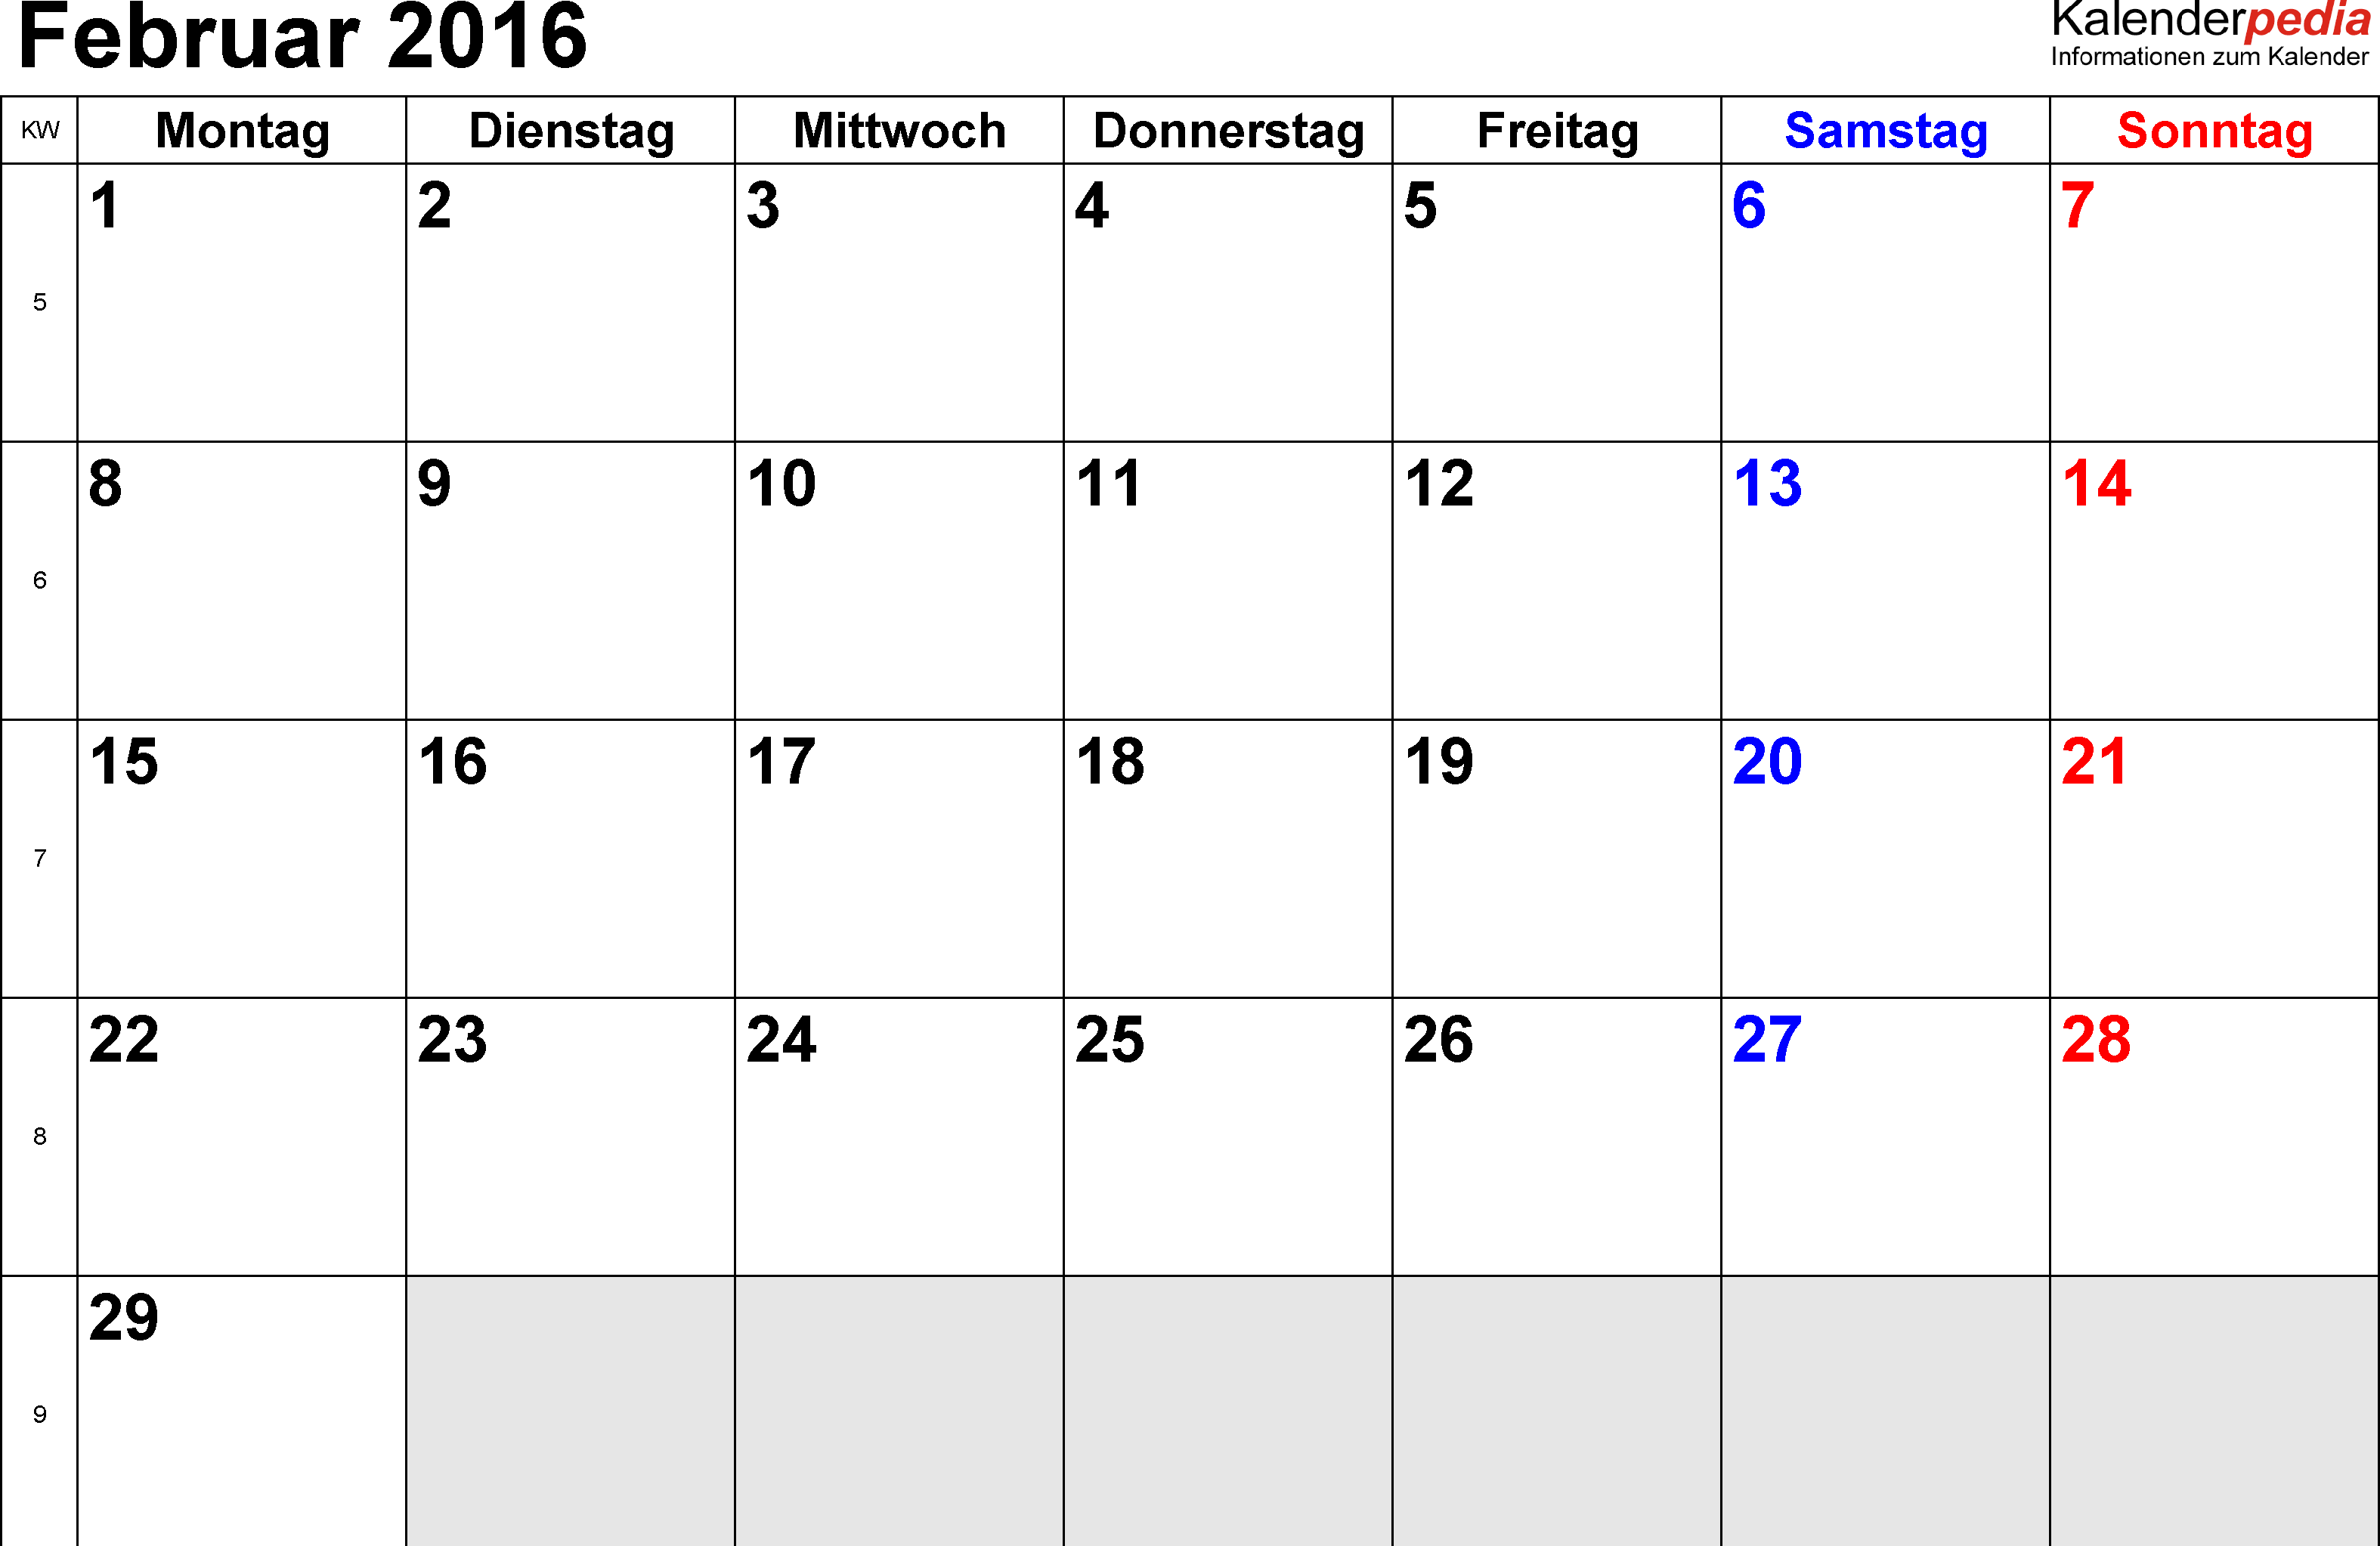 februar-2016-kalender